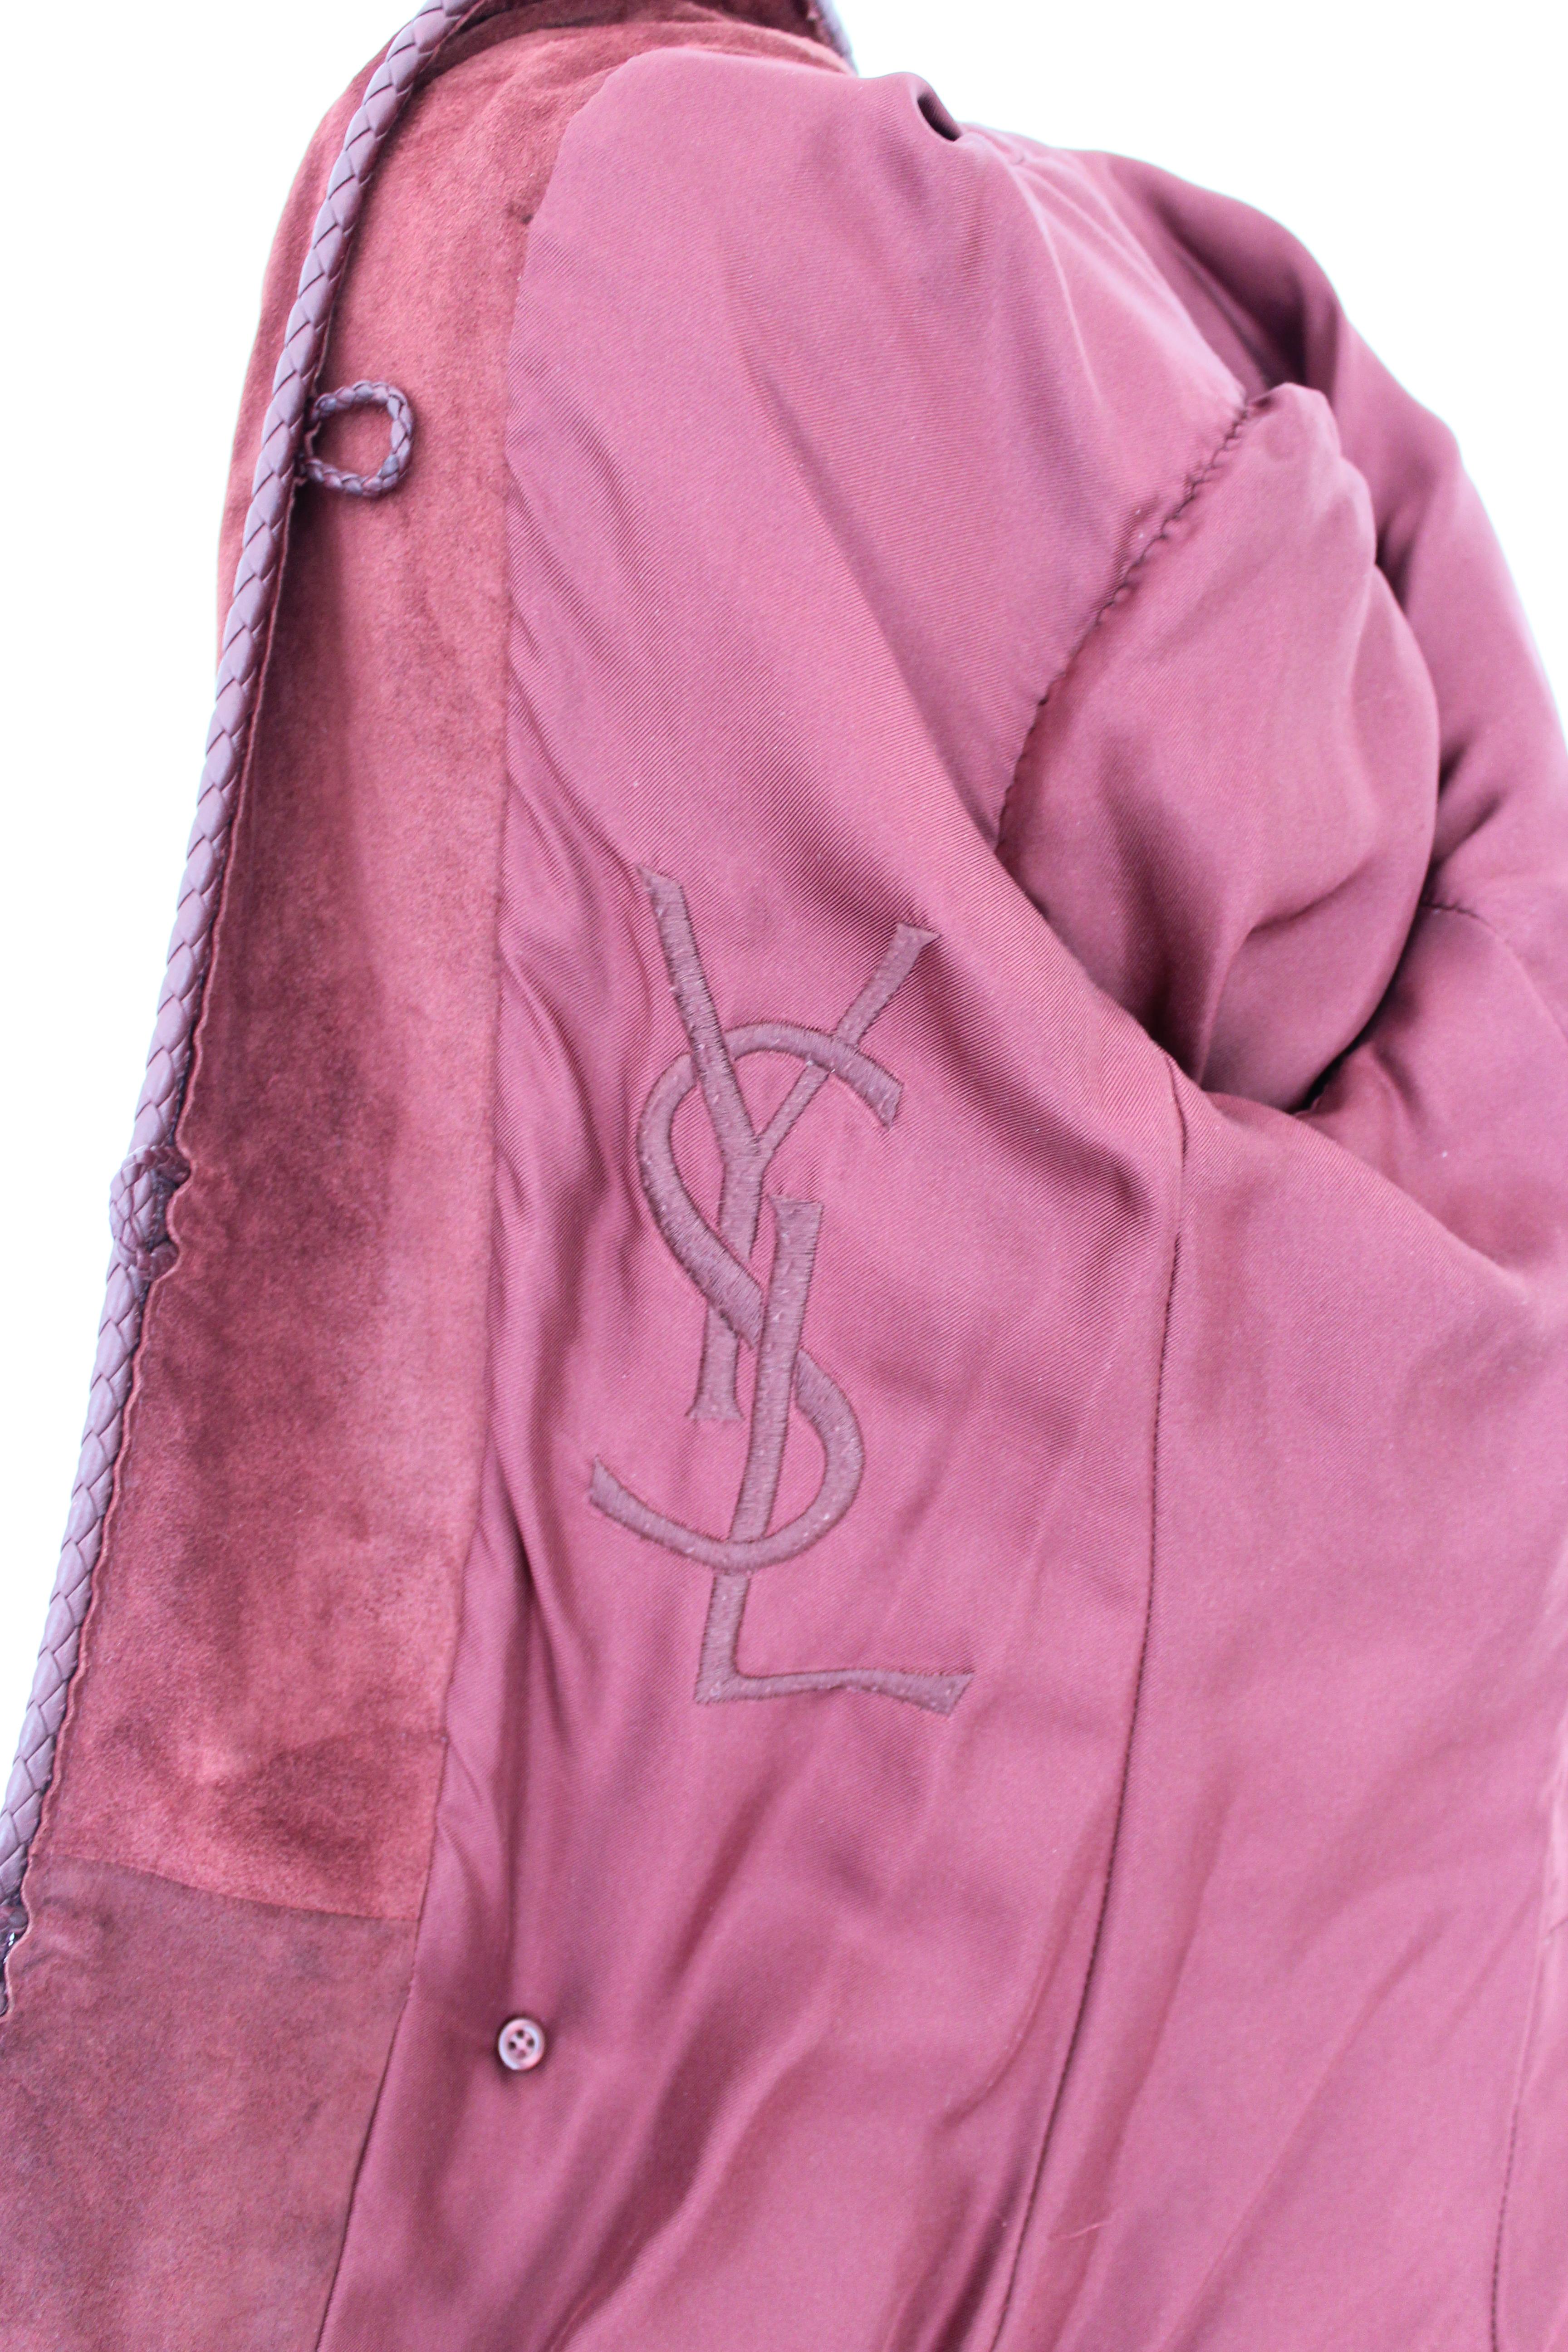 Yves Saint Laurent Rive Gauche Burgundy Leather Jacket 2000s Mandarin Collar 1